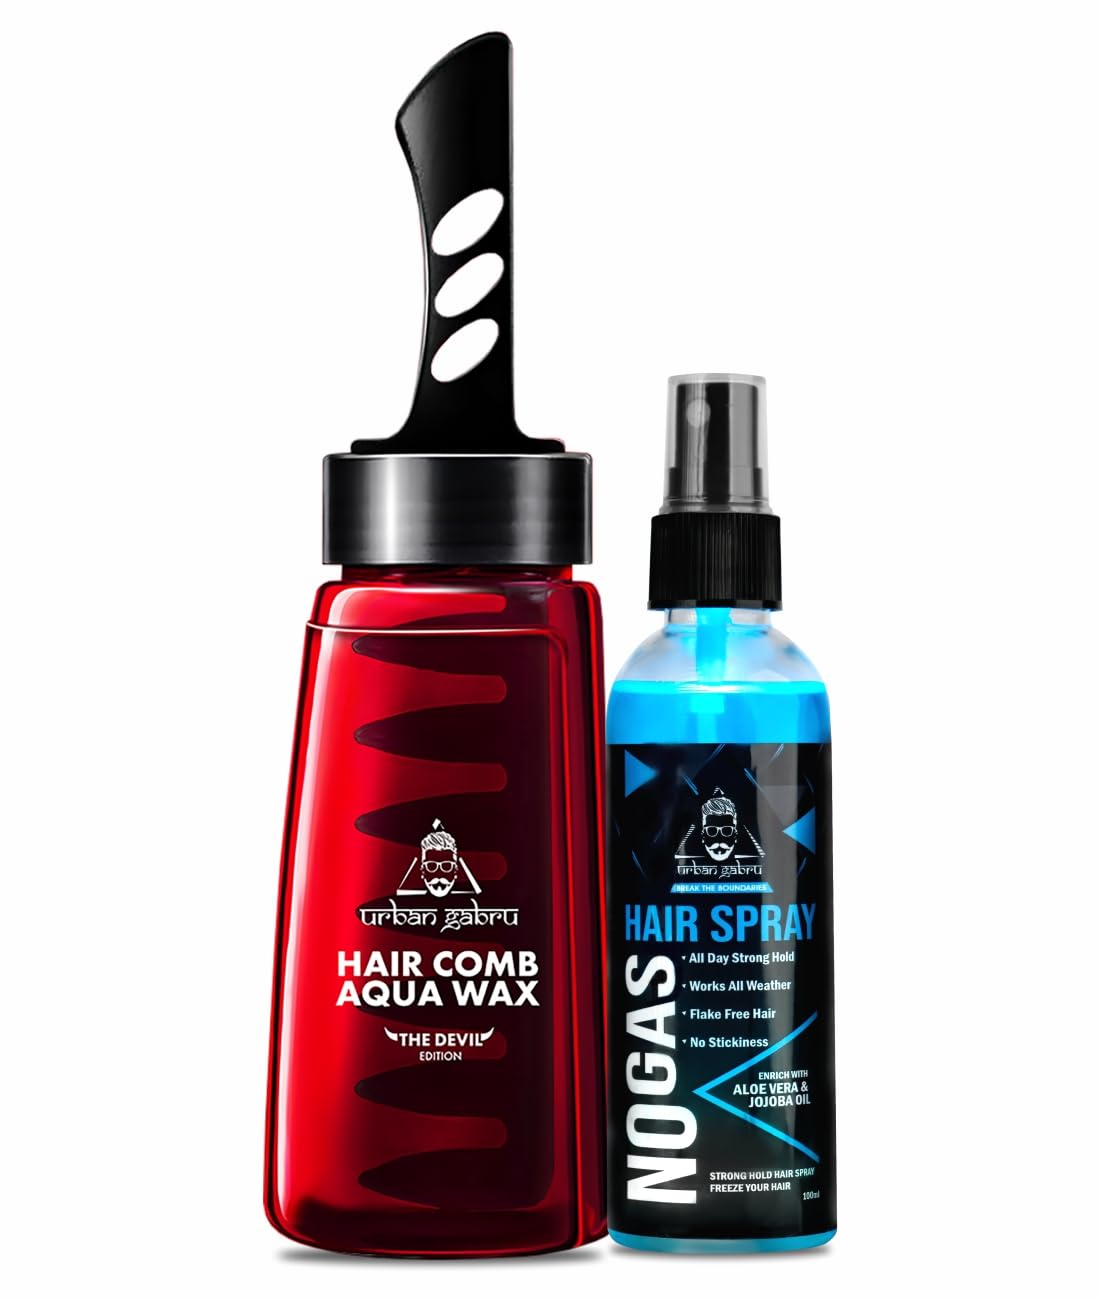 Urbangabru Hair Comb Aqua Wax - The Devil Edition - 260 ML & No Gas Hair Spray 100 ML - Men's Grooming Combo Kit